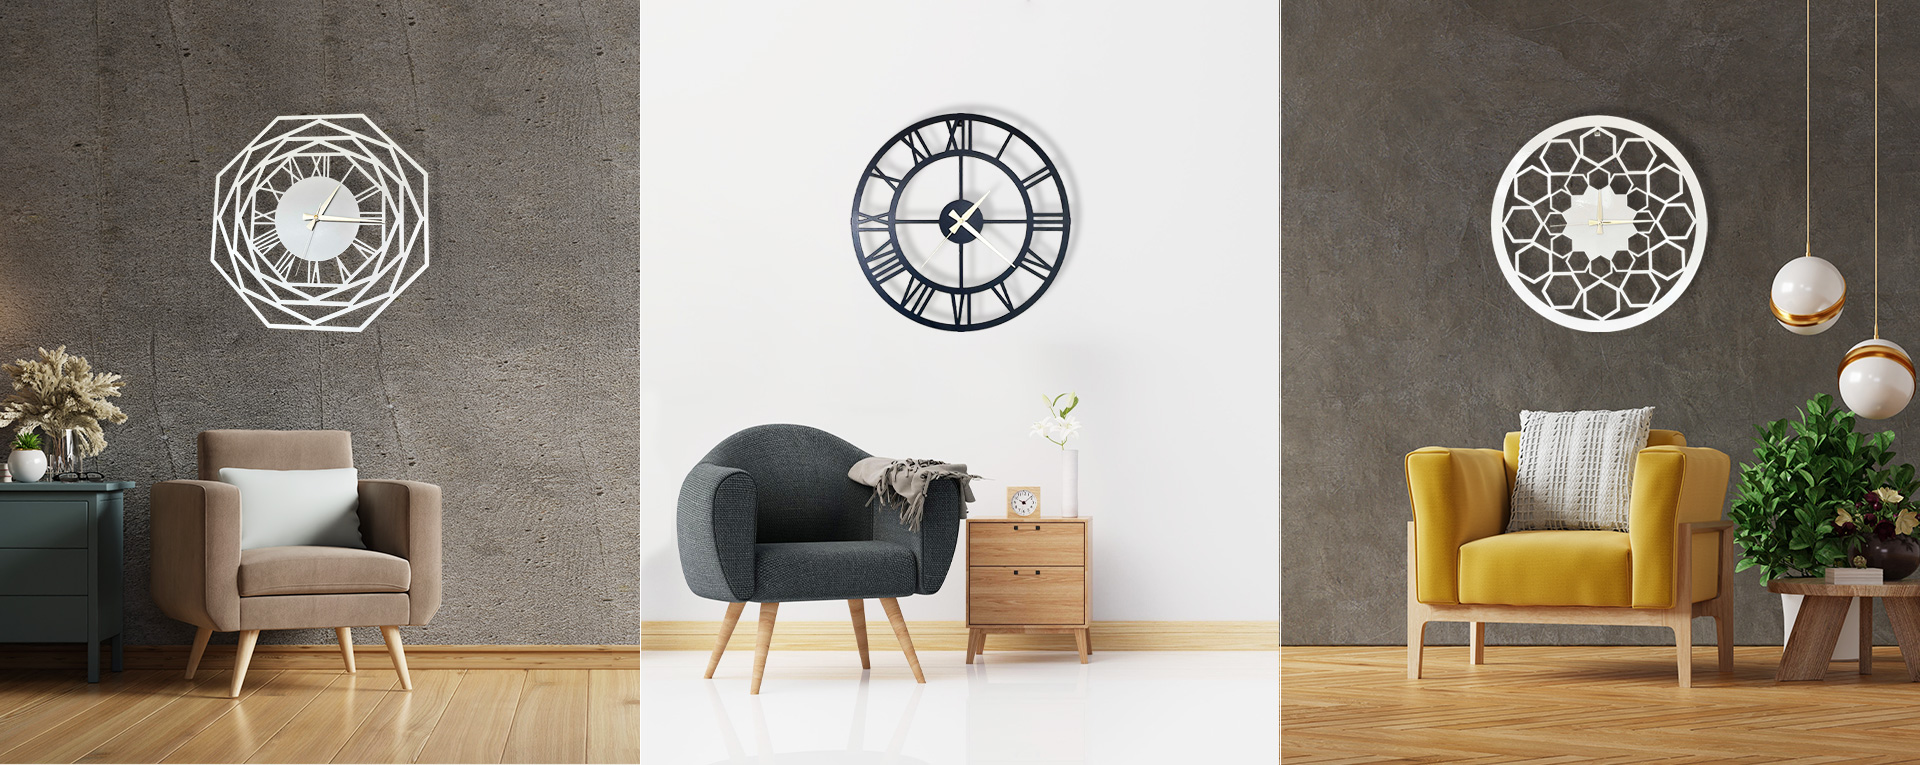 Large black retro wall clock